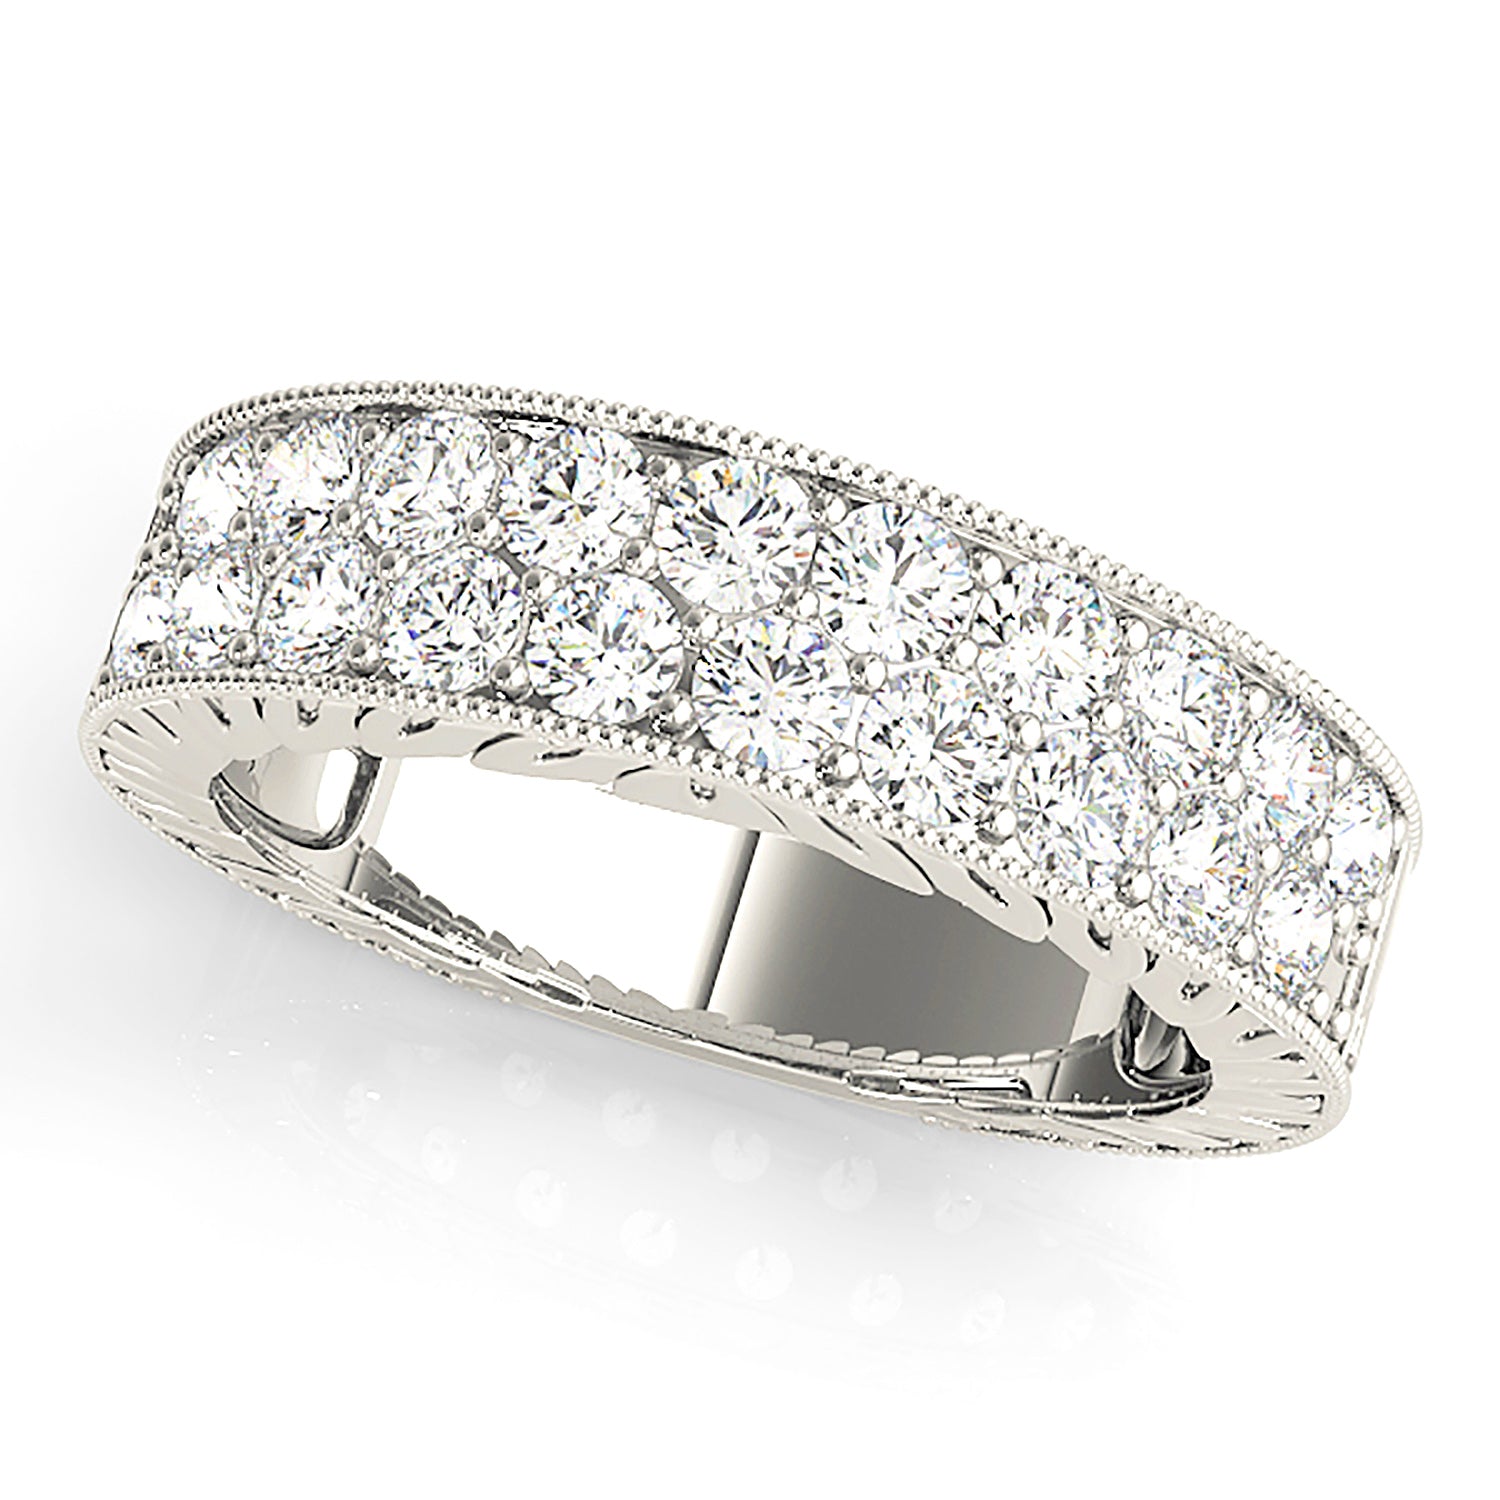 Two Row Diamond Wedding Band - 14K/18k Solid White Gold / Platinum | Pave Set Diamond Anniversary Ring | Milgrain Design-in 14K/18K White, Yellow, Rose Gold and Platinum - Christmas Jewelry Gift -VIRABYANI